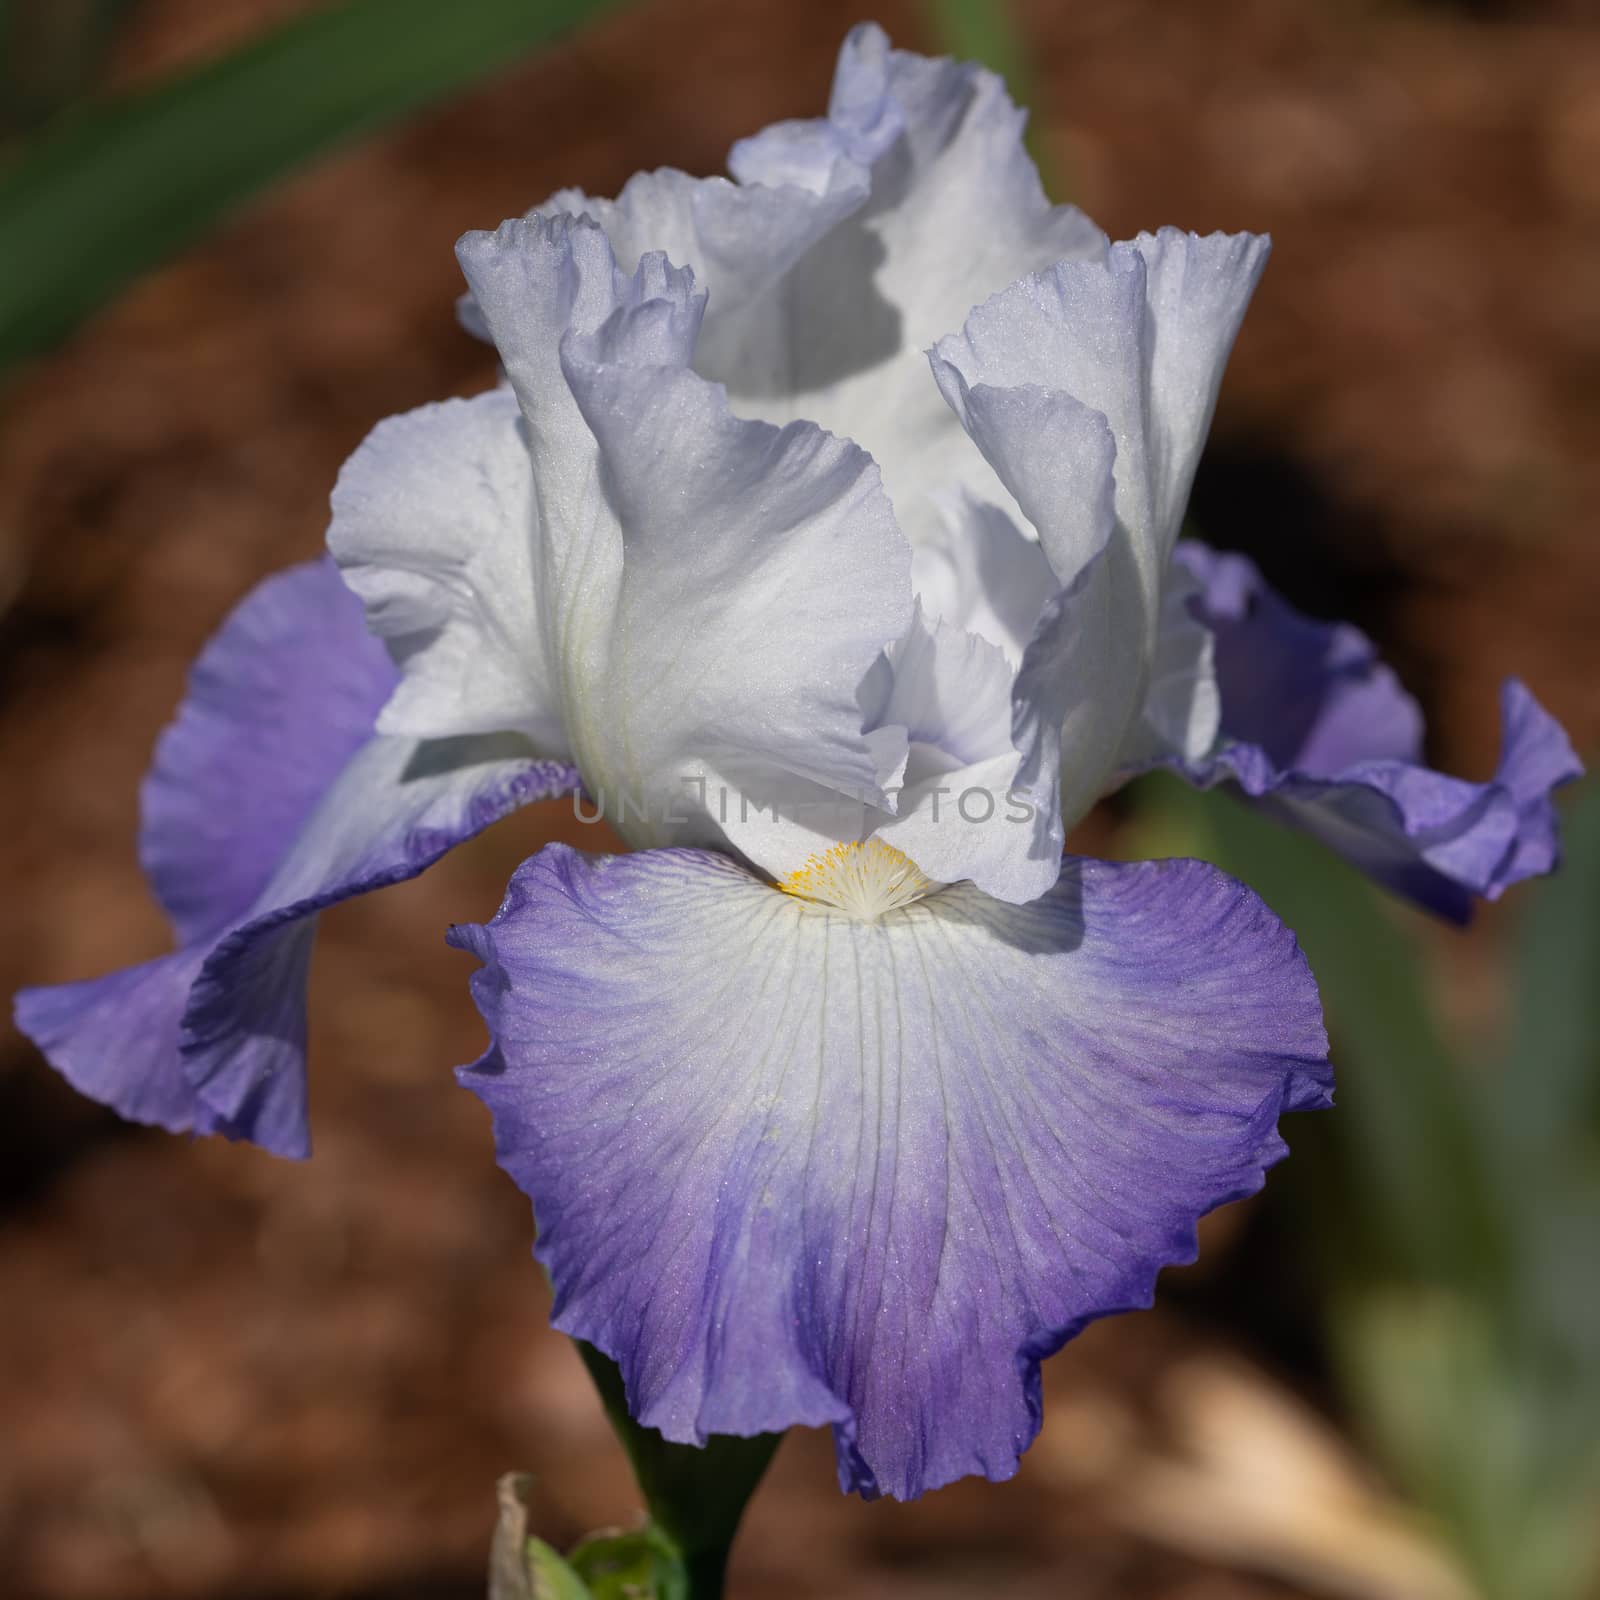 German iris (Iris barbata), close up of the flower head